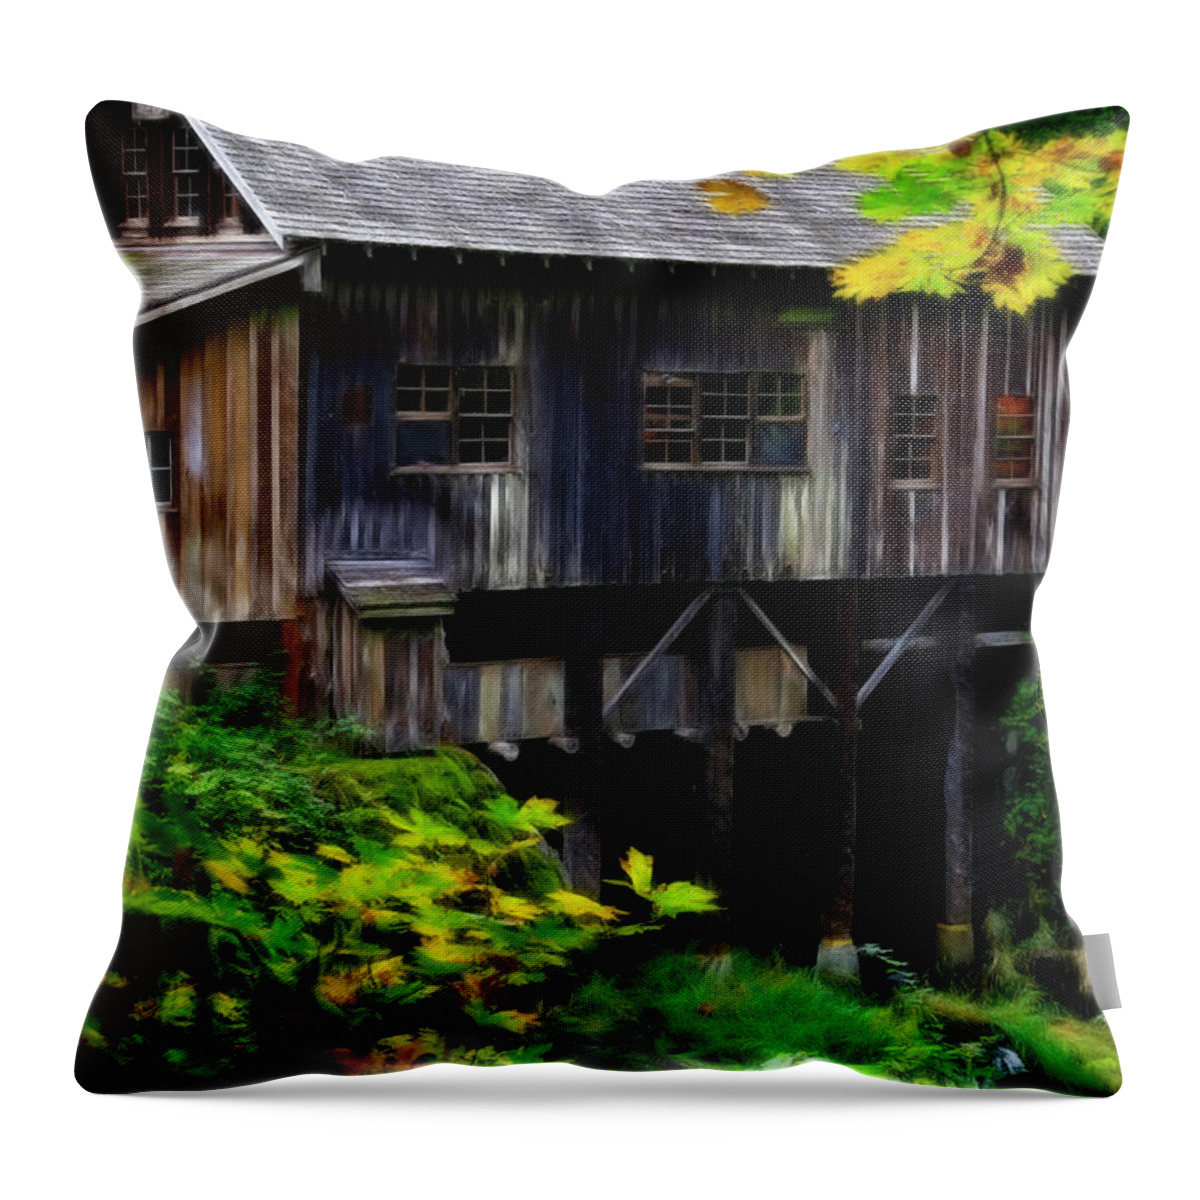 Cedar Creek Grist Mill Throw Pillow featuring the photograph Autumn At Cedar Creek Grist Mill #1 by Athena Mckinzie